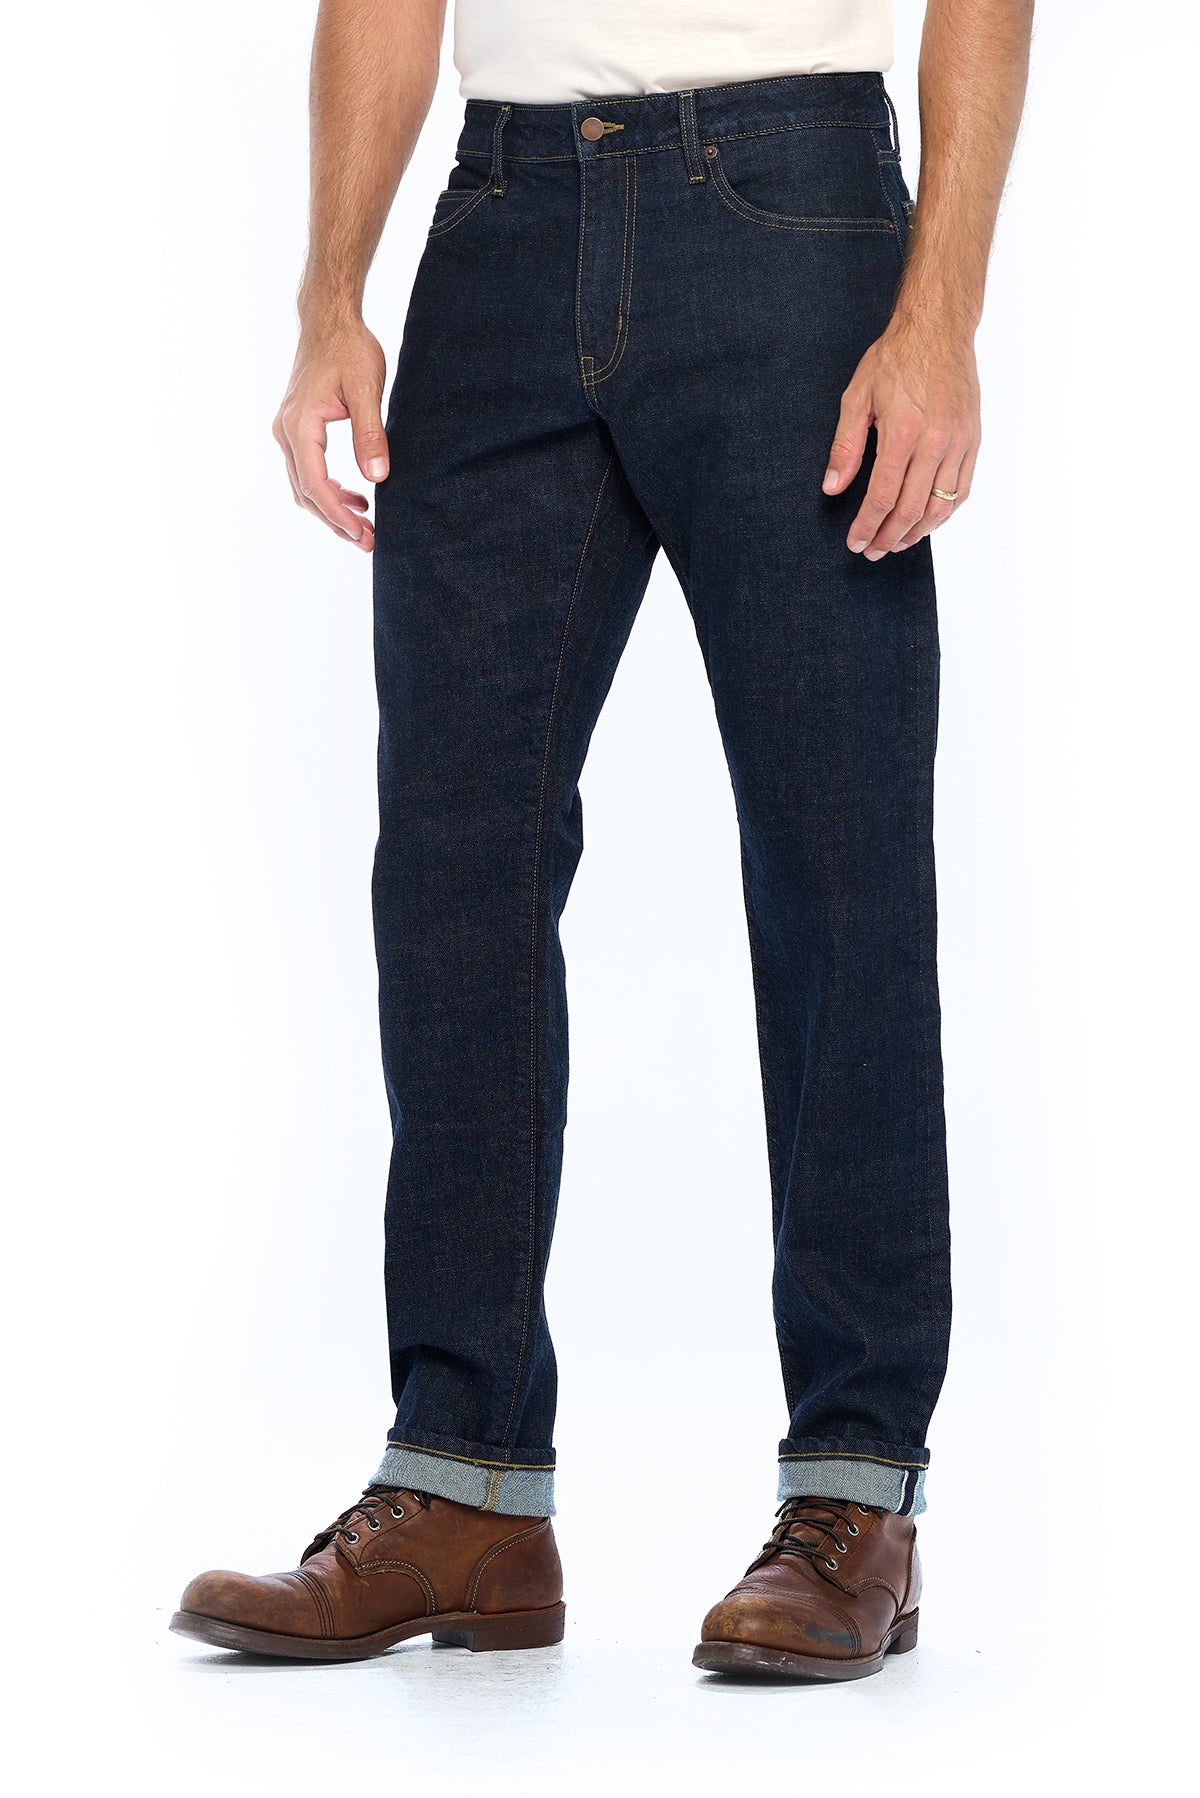 The Best Travel Jeans for Men | Selvedge Dark Indigo | Made in the